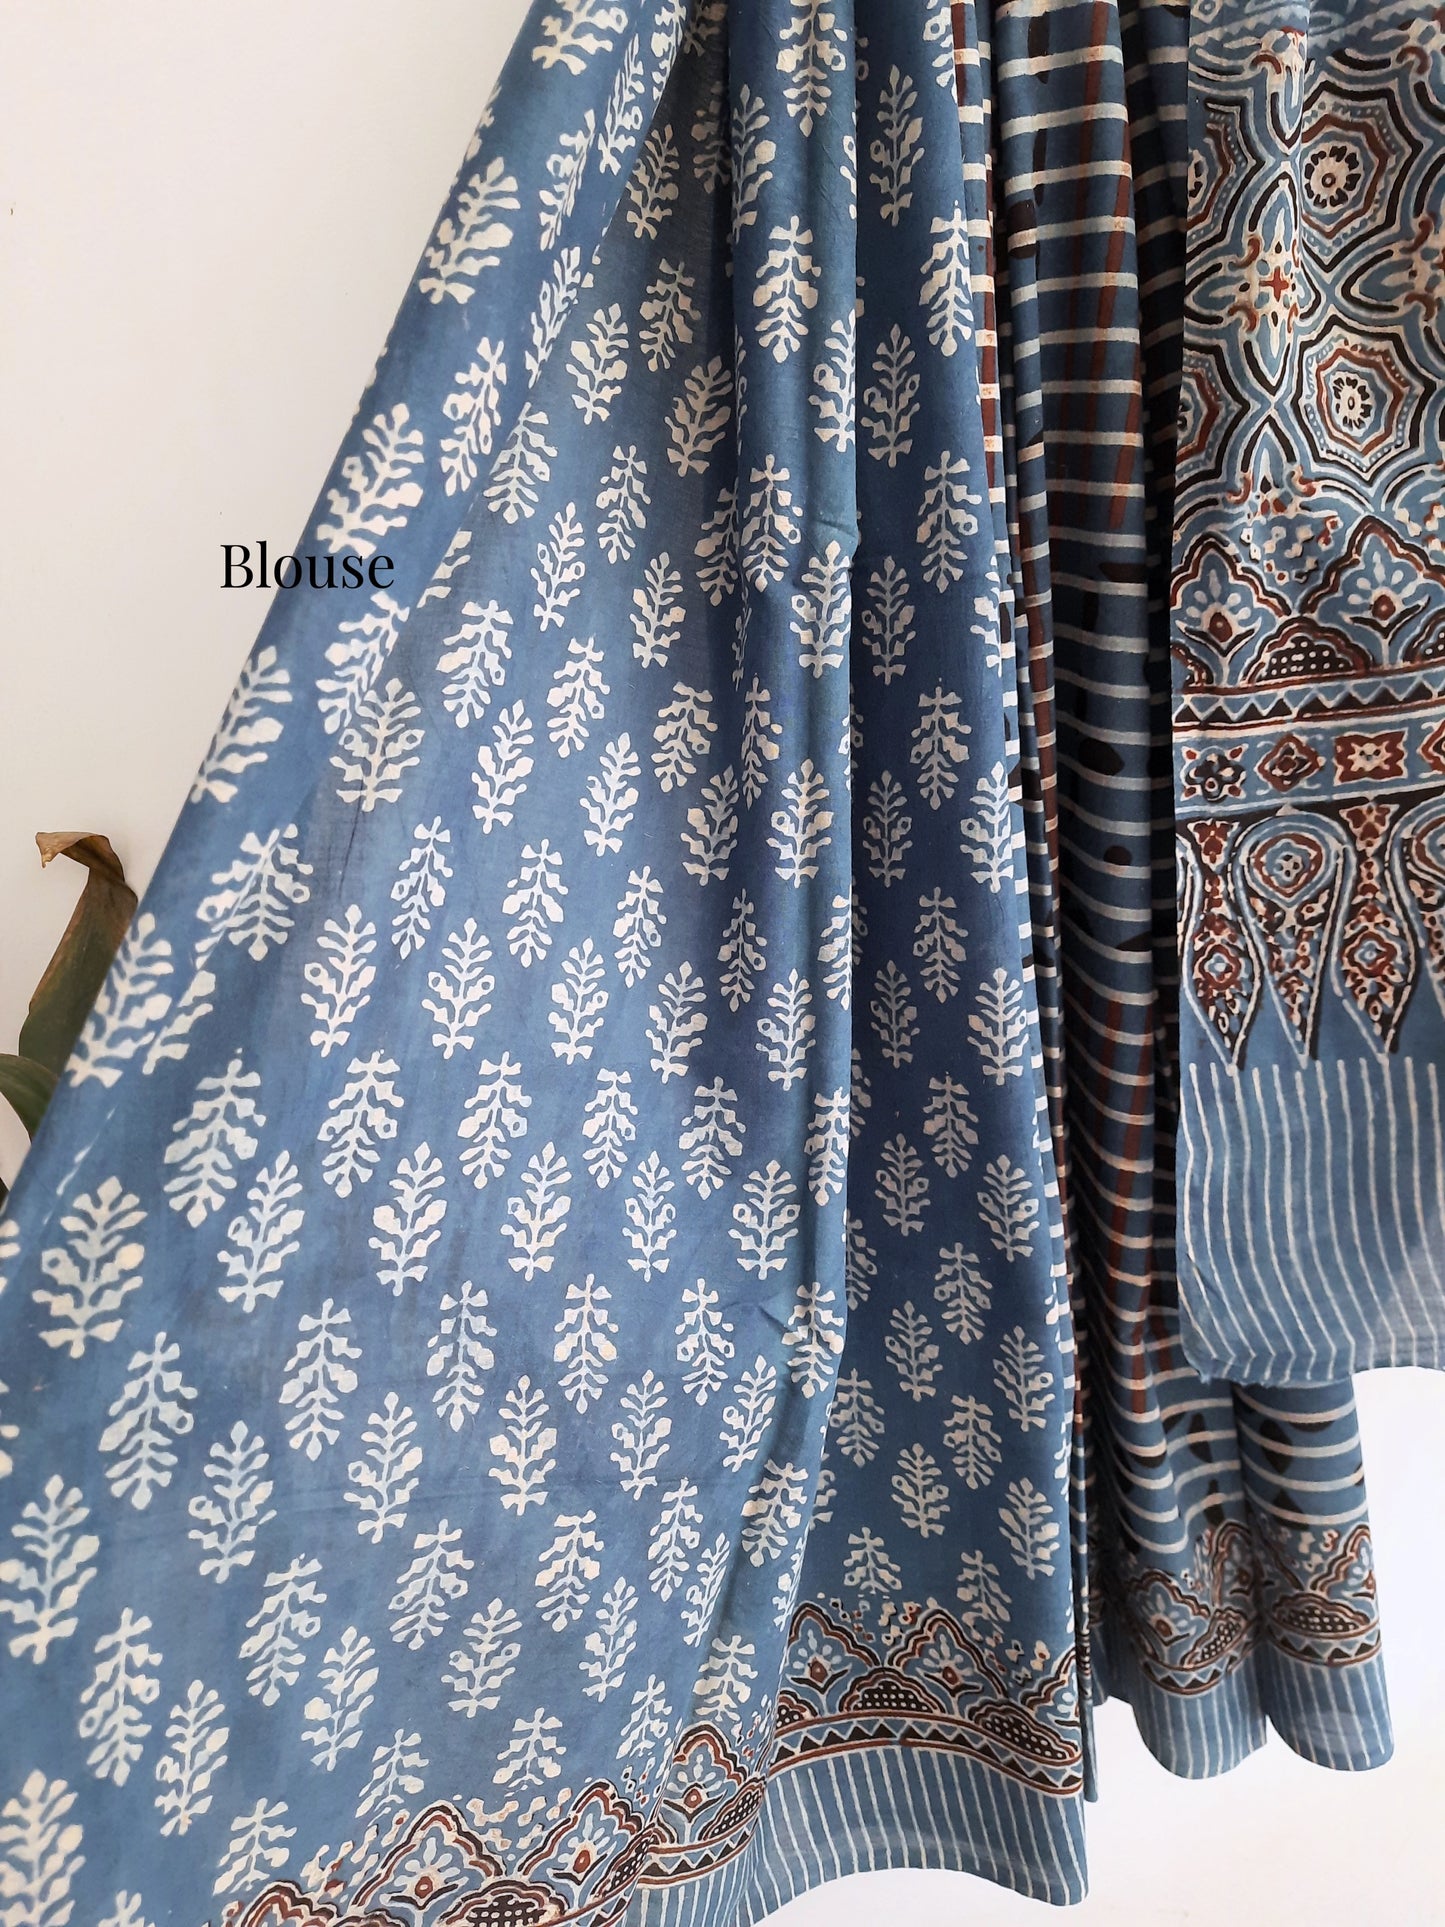 "Image: Indigo Ajrakh Prints Cotton Saree by Turquoisethestore, showcasing intricate hand block prints on breathable pure cotton fabric."